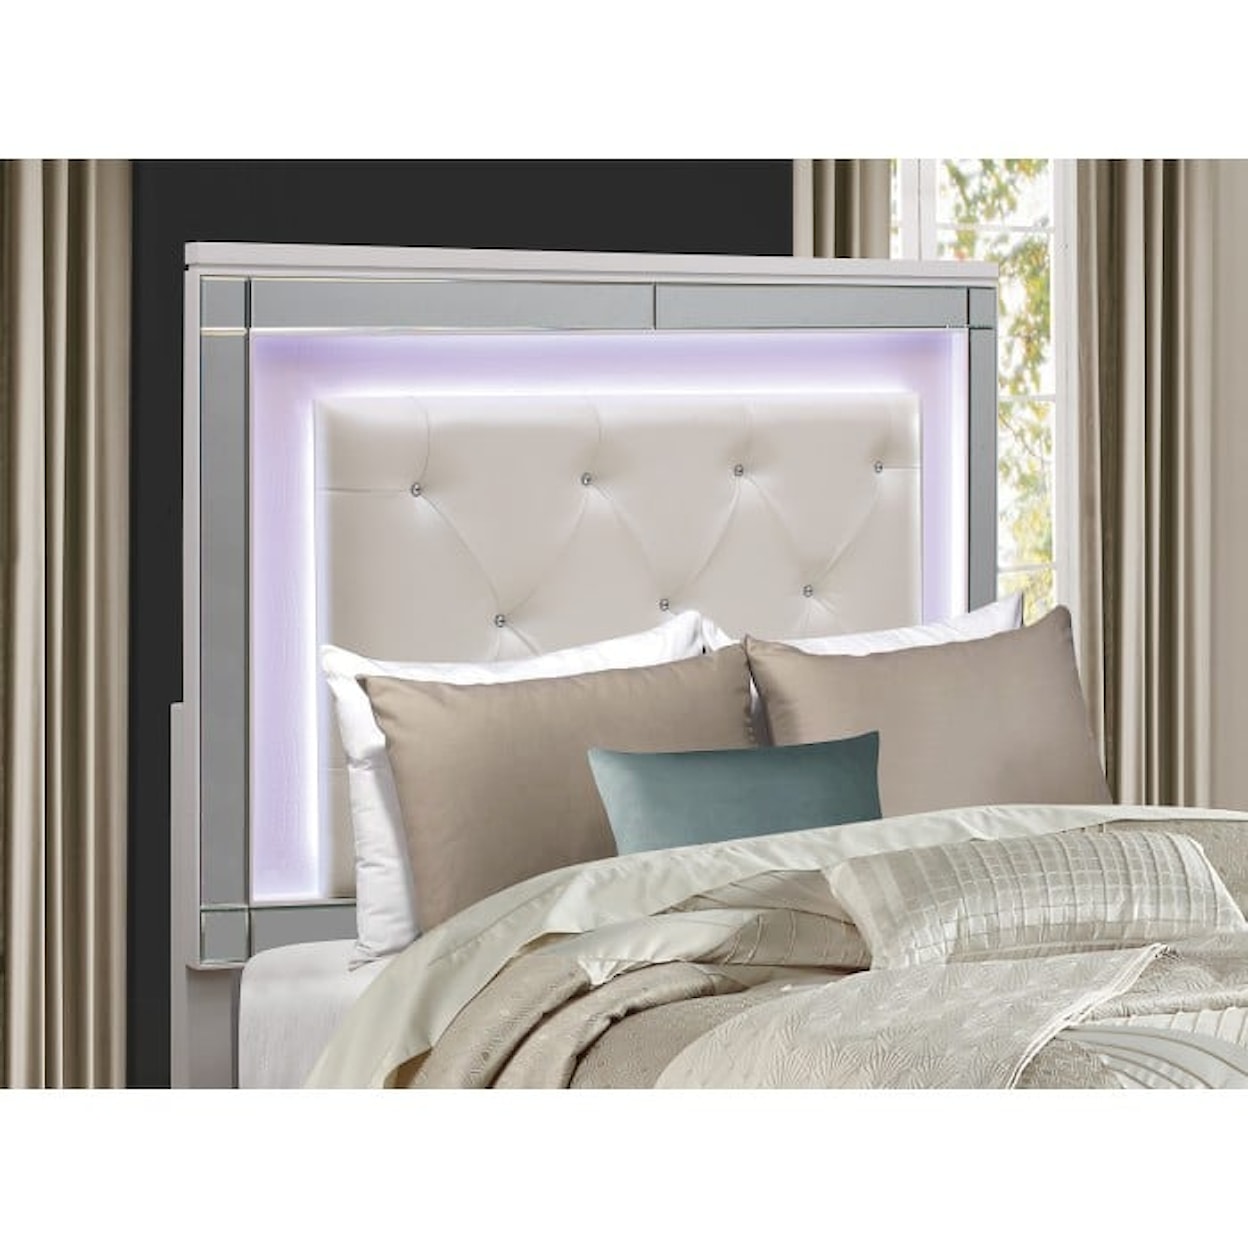 Homelegance Alonza King Bed with LED Lighting